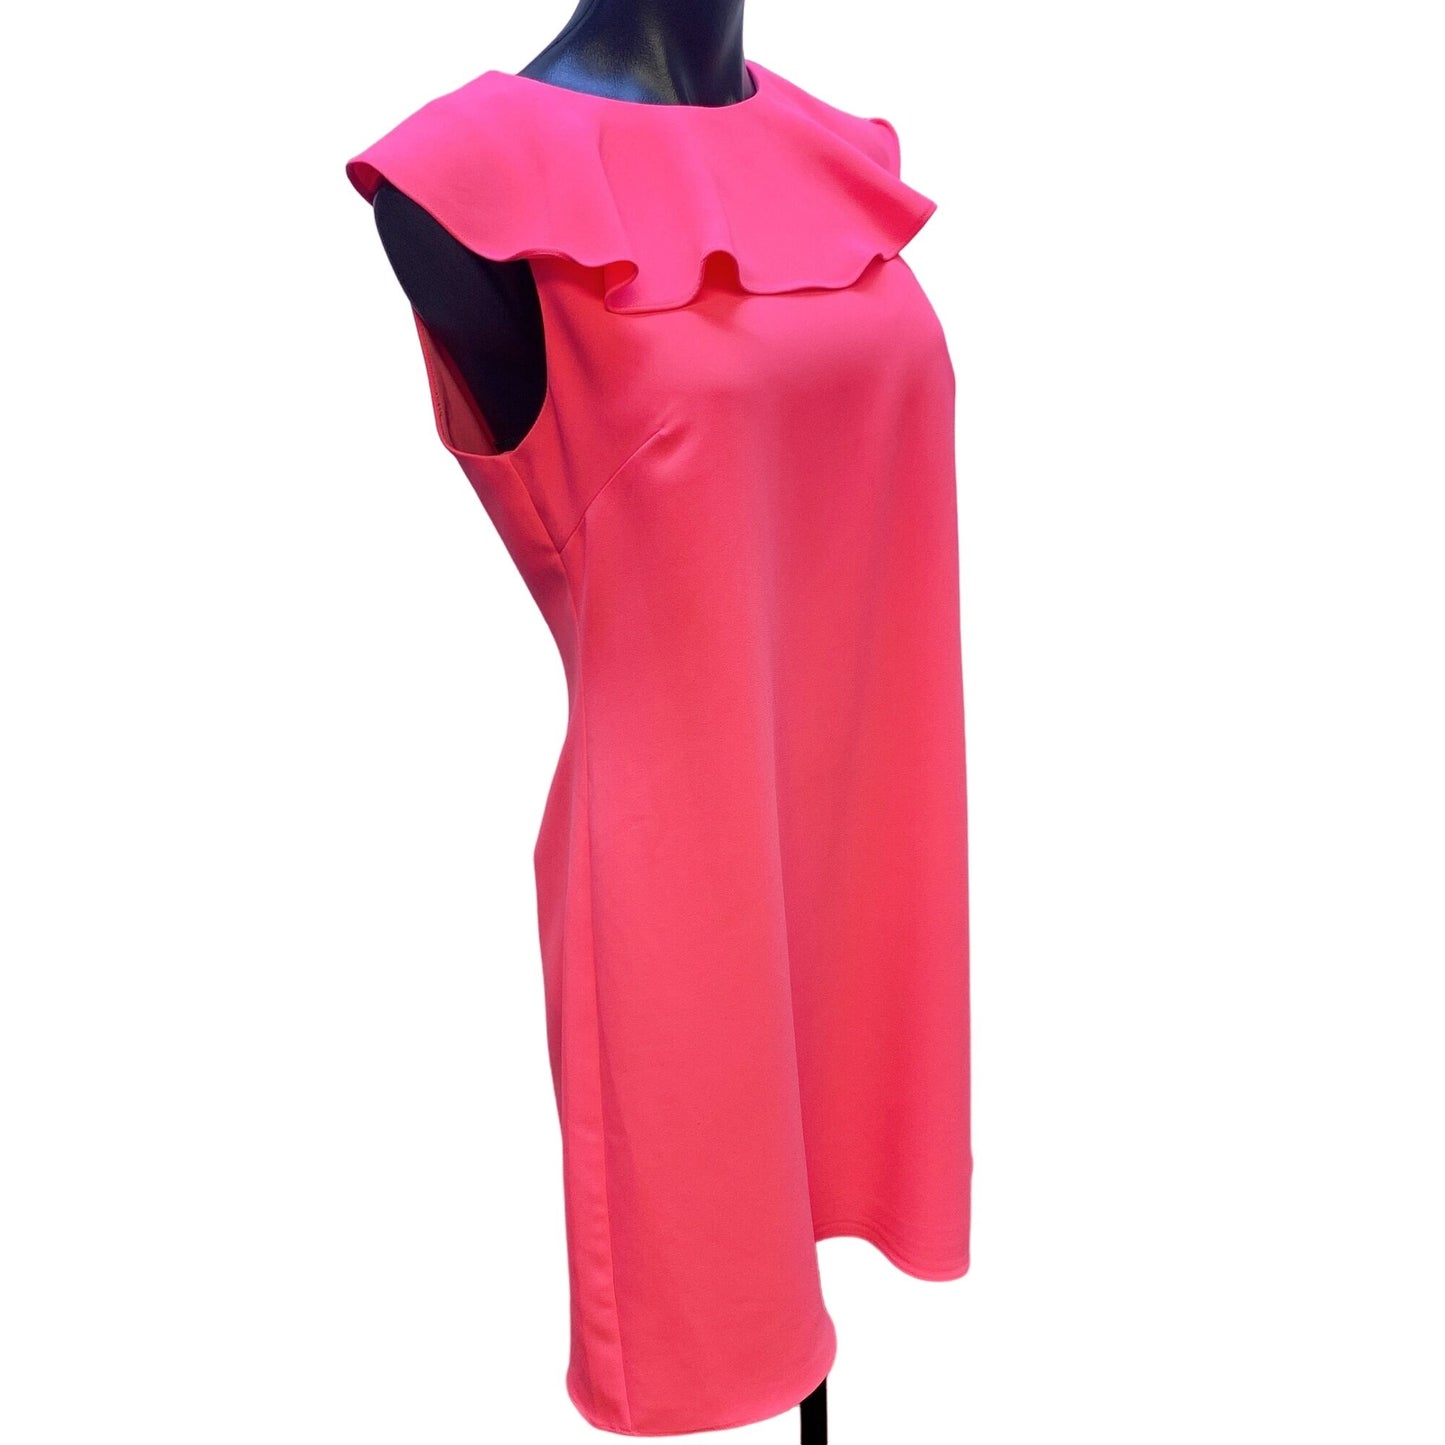 *Sail to Sable Hot Pink Sleeveless Dress Size 6